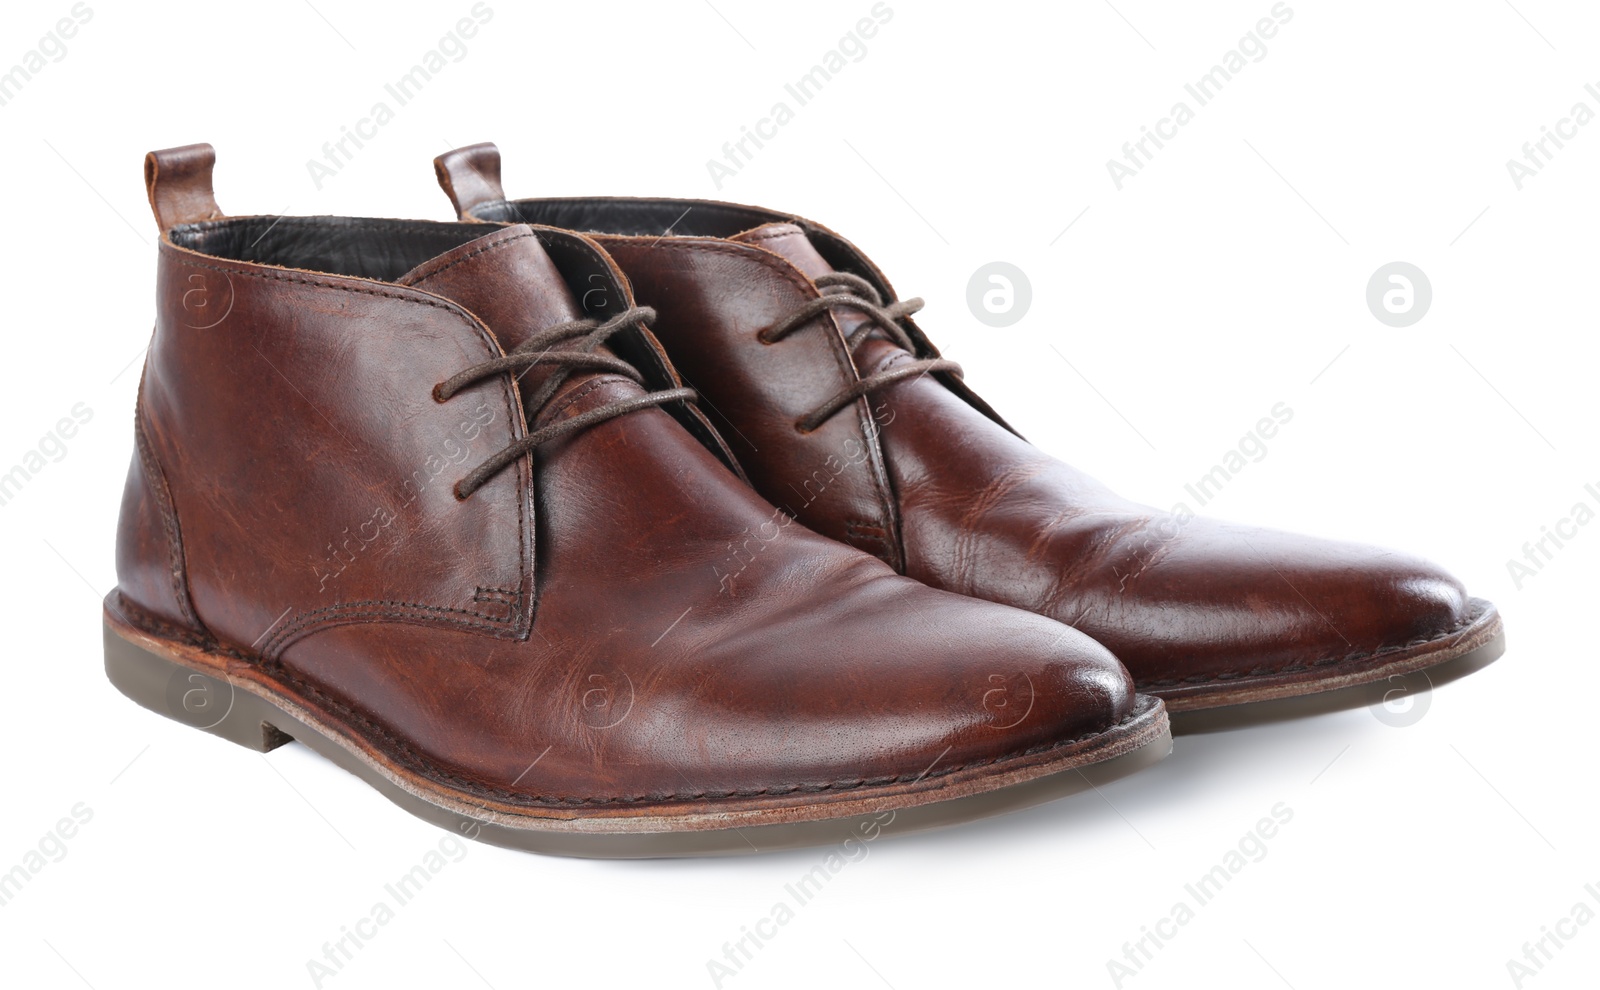 Photo of Pair of stylish leather shoes isolated on white